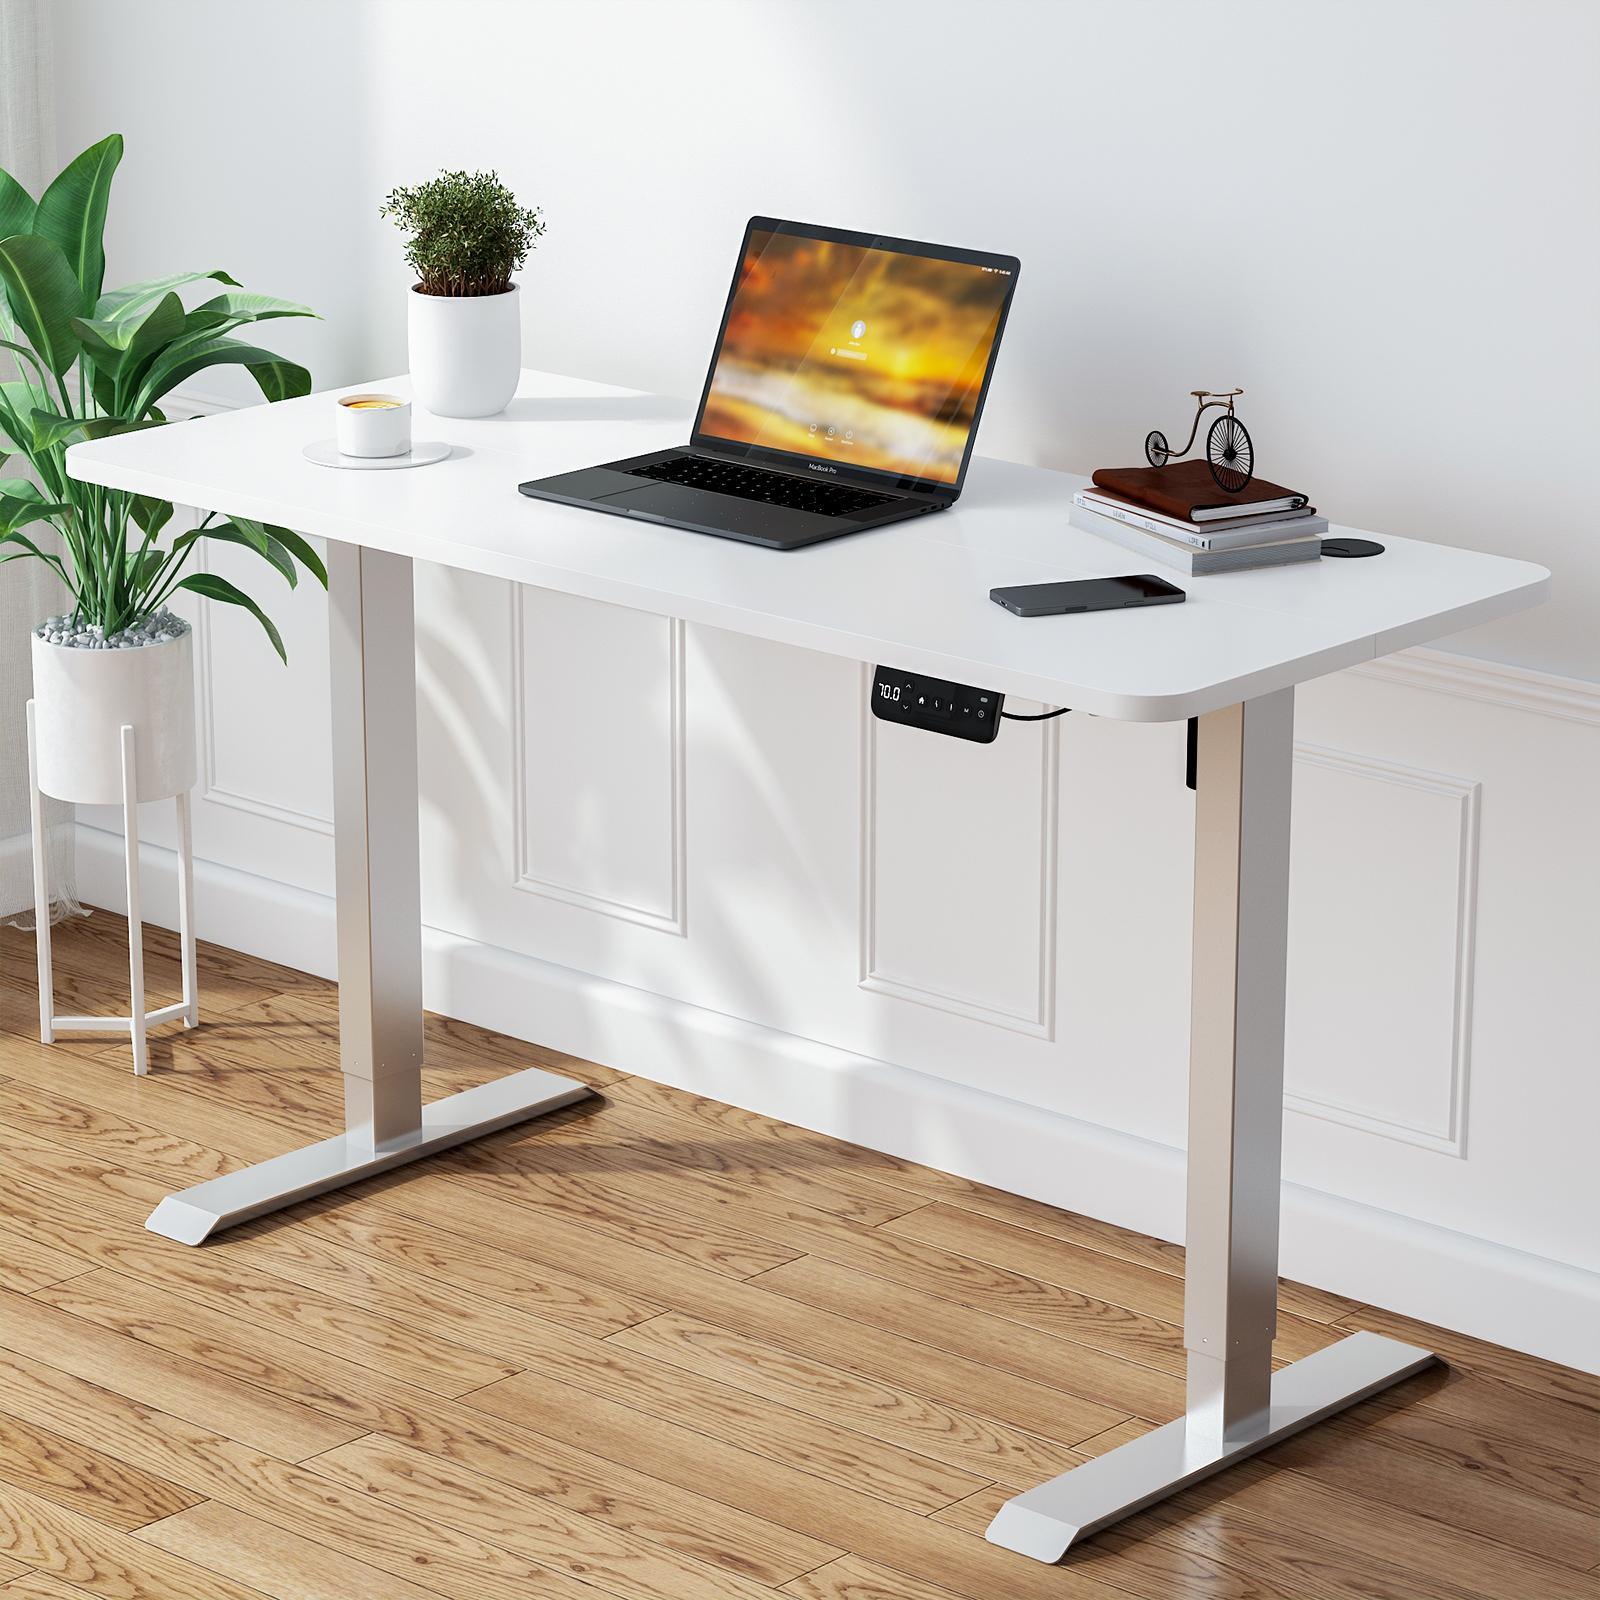 Advwin Adjustable Height Electric Standing Desk 140cm